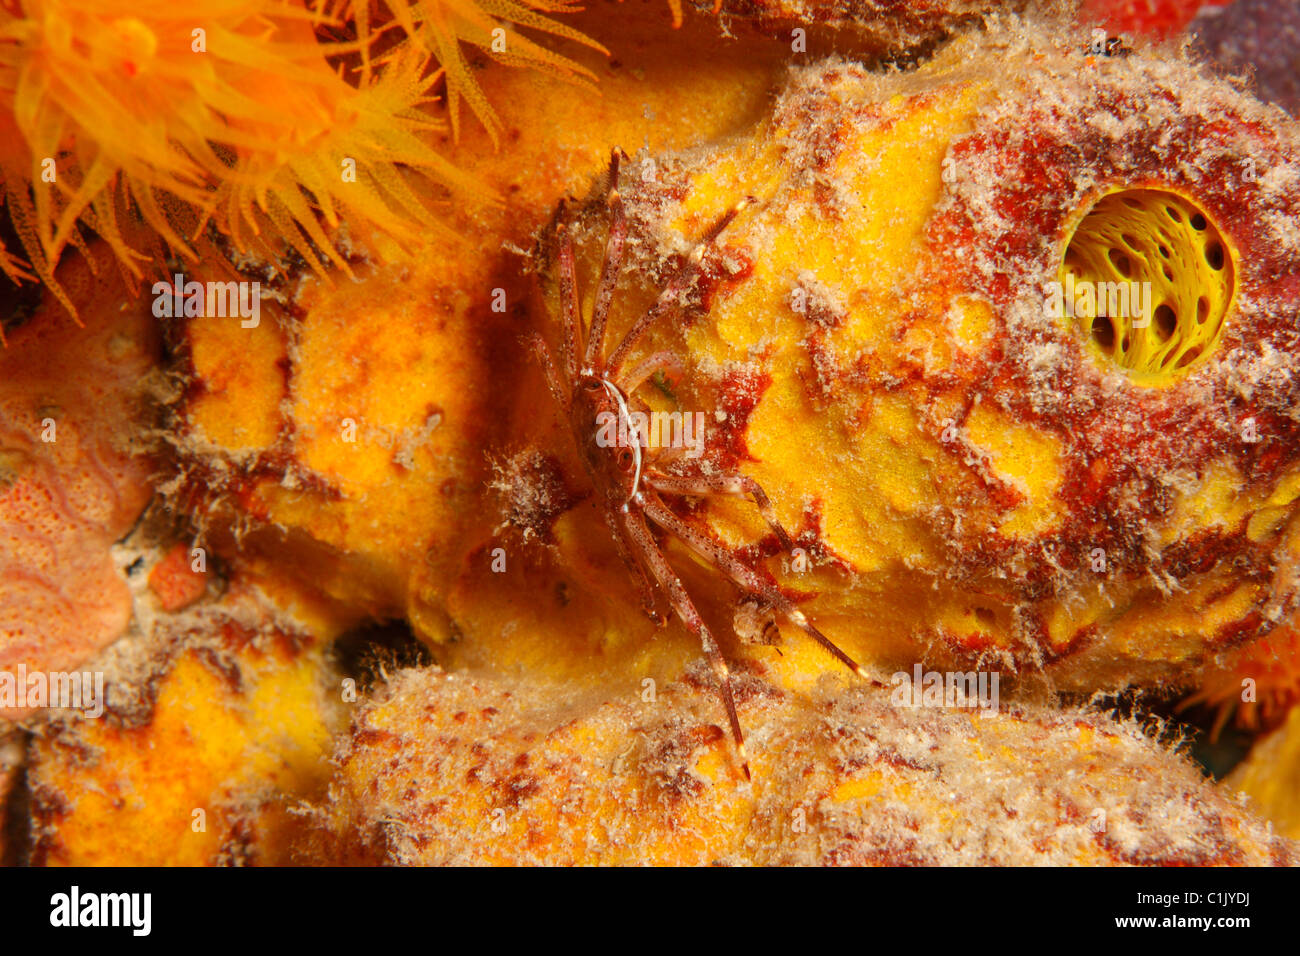 Red-ridged Clinging Crab (Mithrax forceps) on Tube Sponge (Aplysina fistularis). Stock Photo